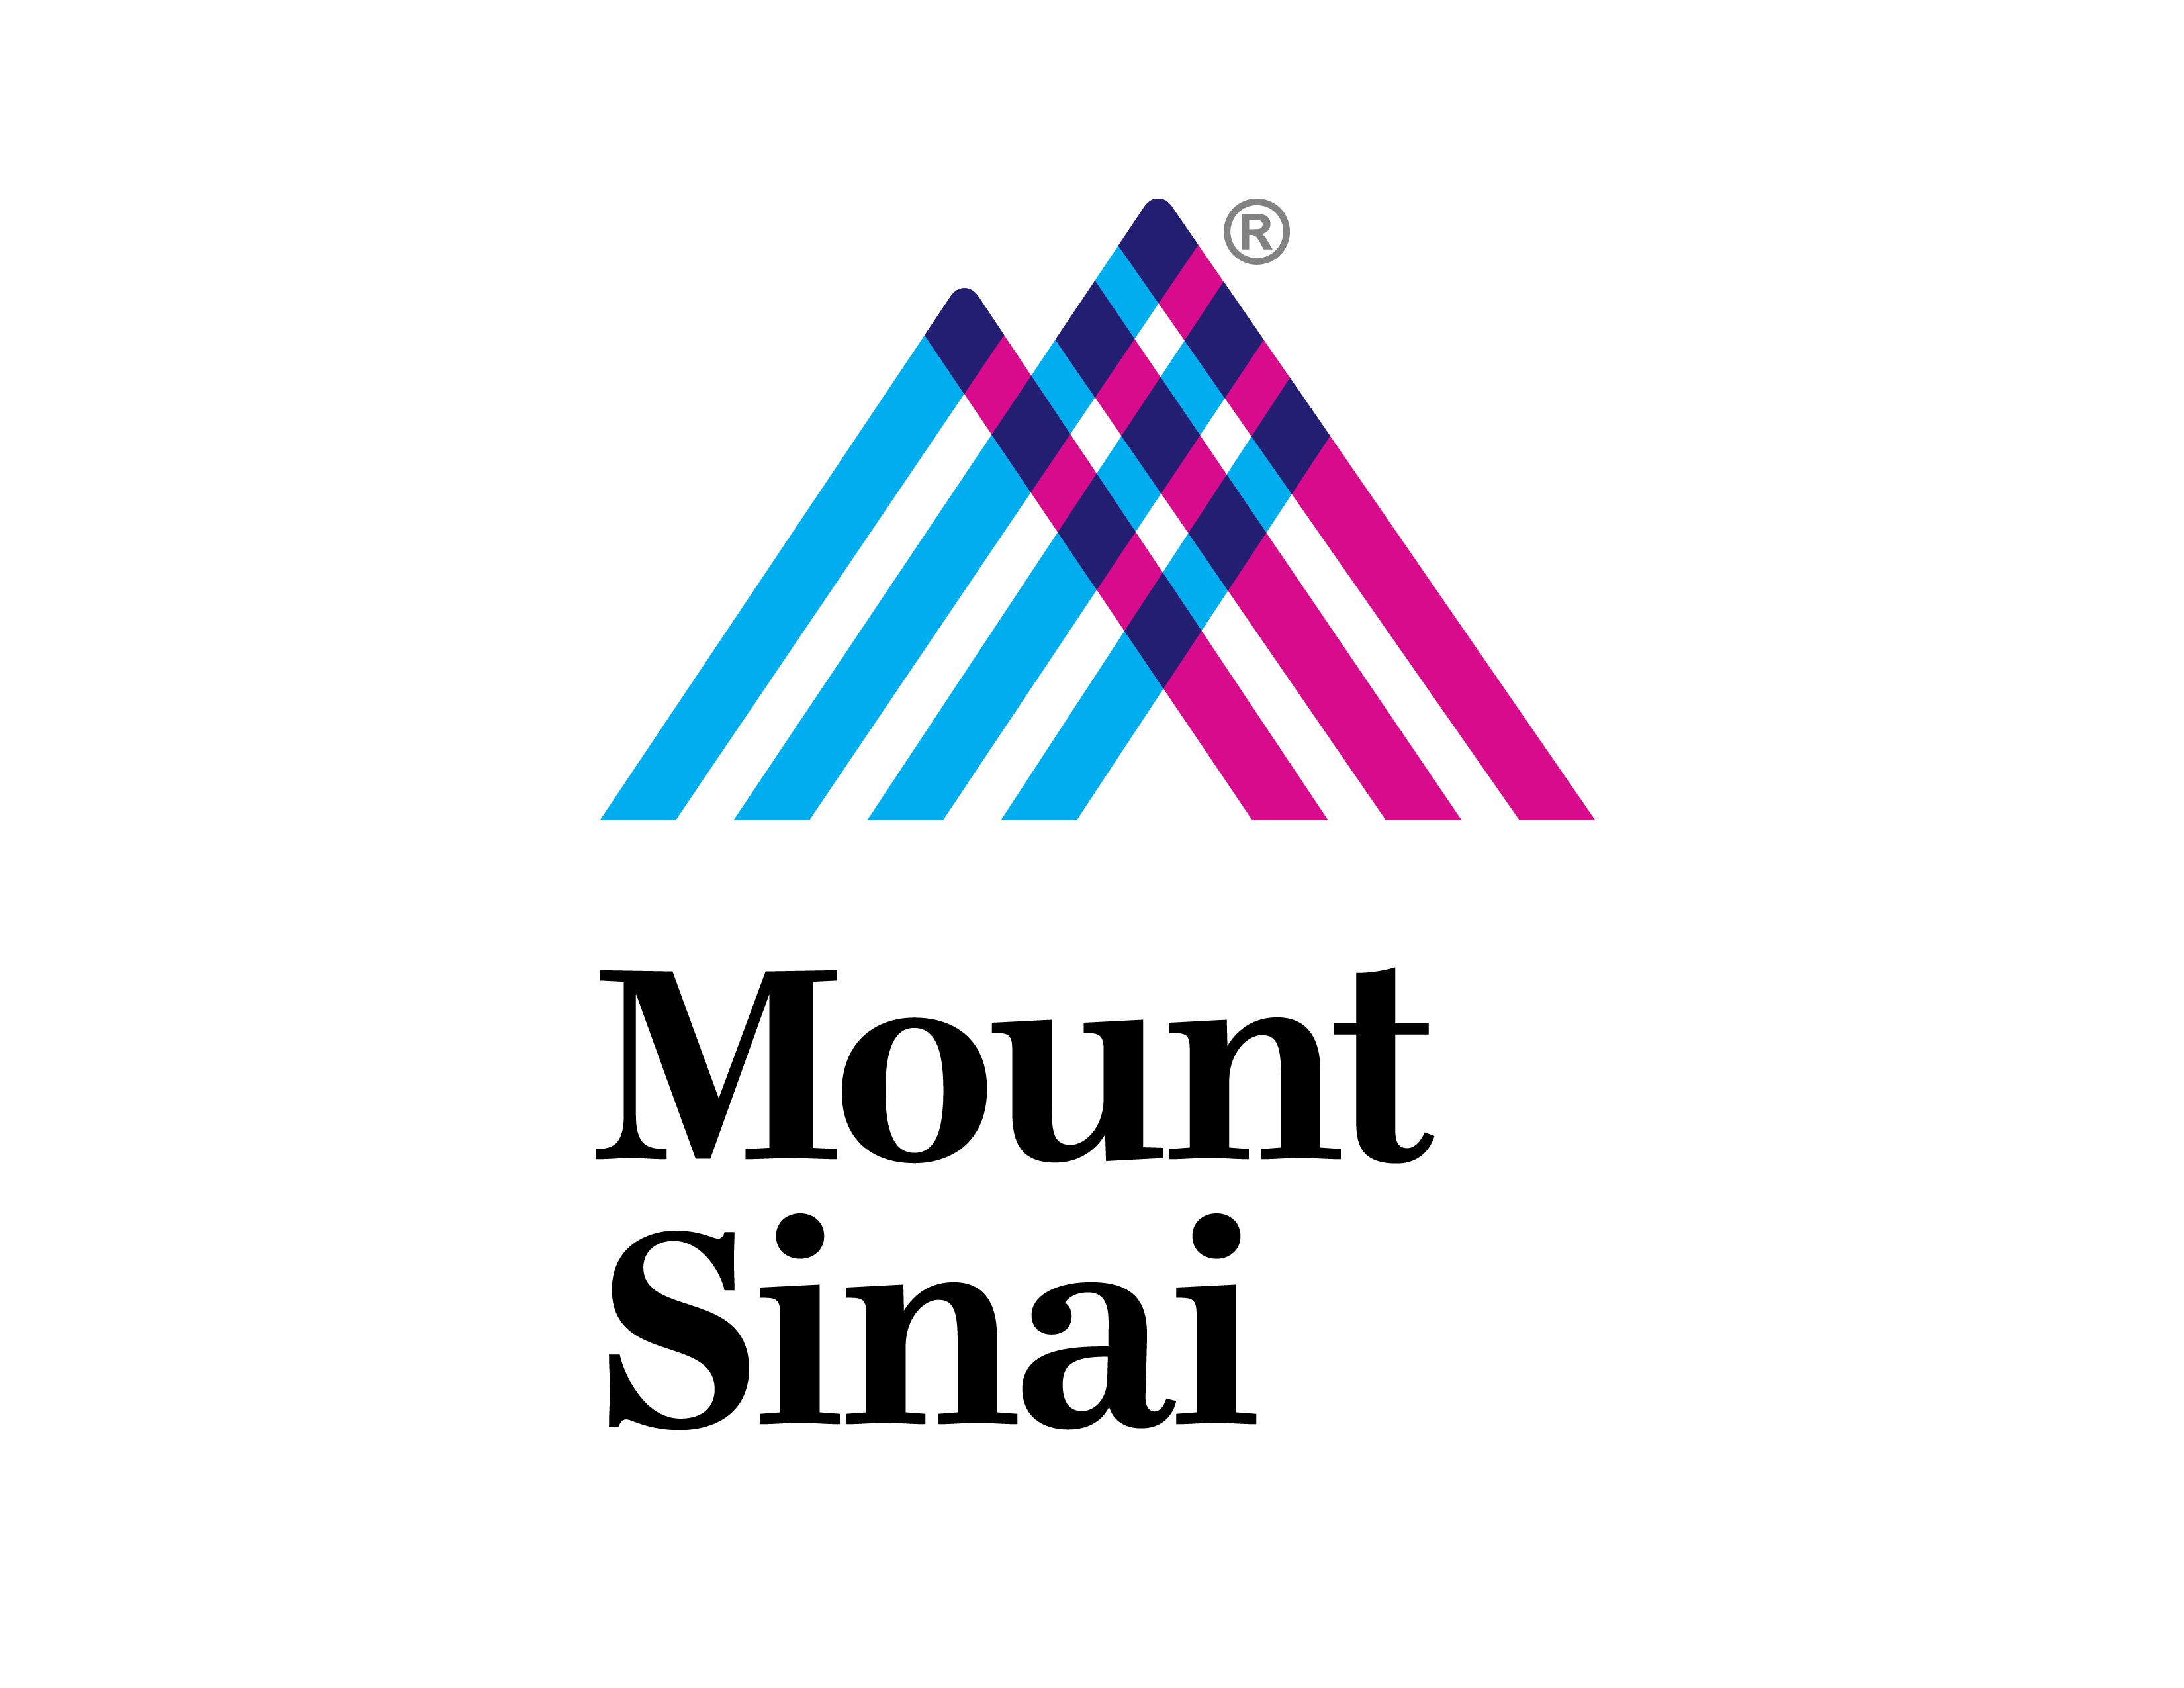 Strategic Alliance Partnership | <b>Icahn School of Medicine at Mount Sinai</b>